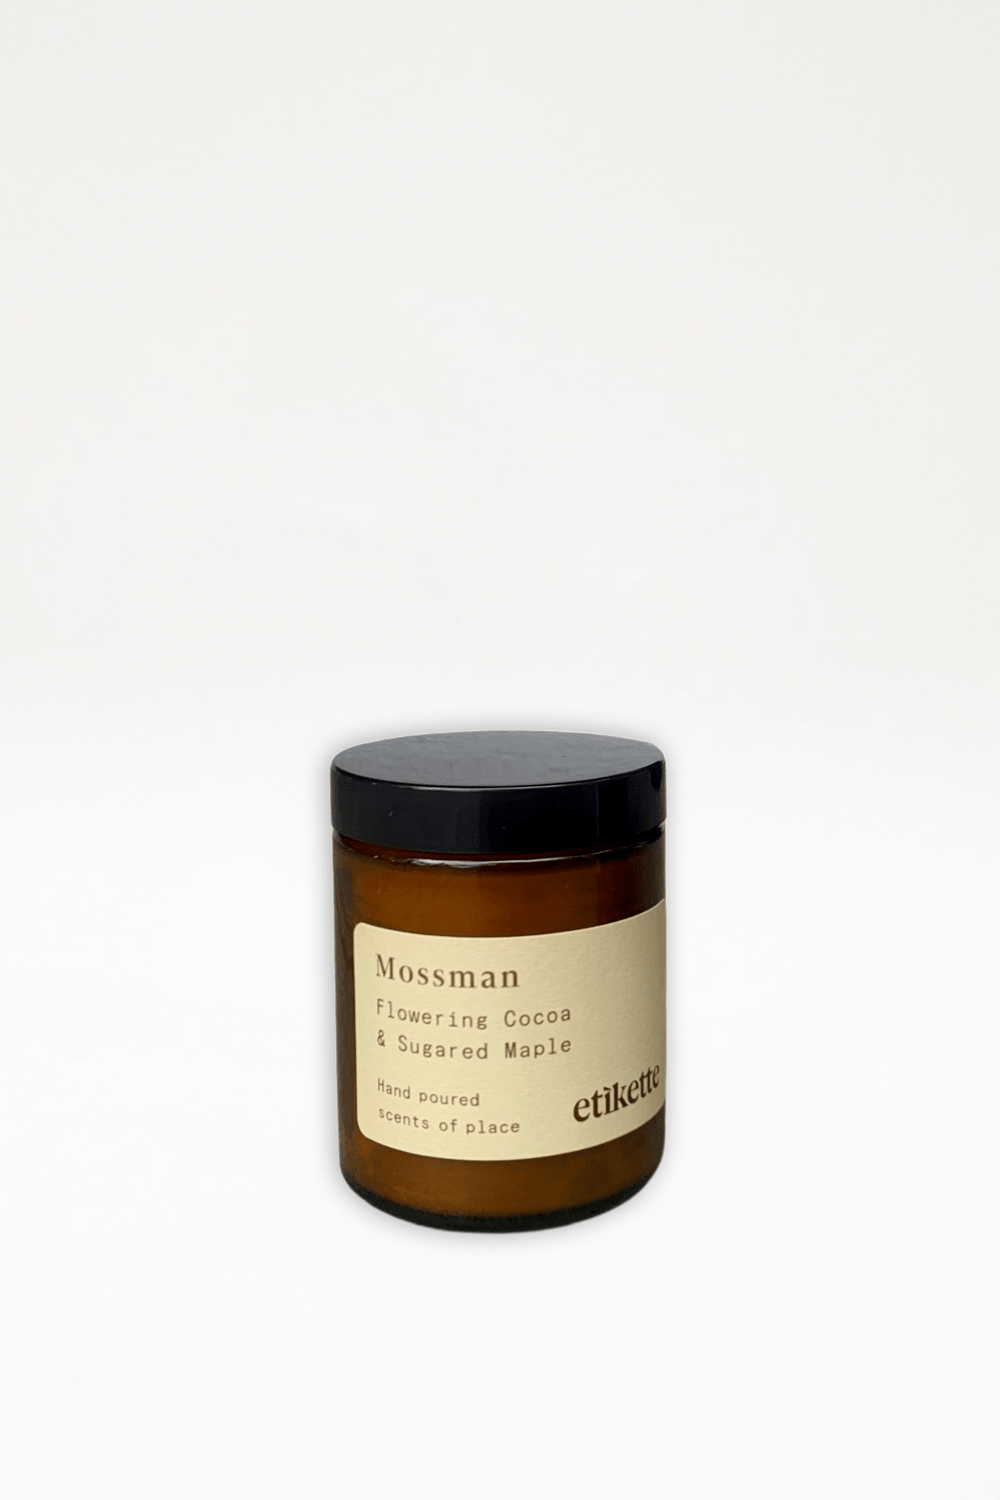 Etikette Candle - Mossman - Flowering Cocoa & Sugared Maple - Ensemble Studios